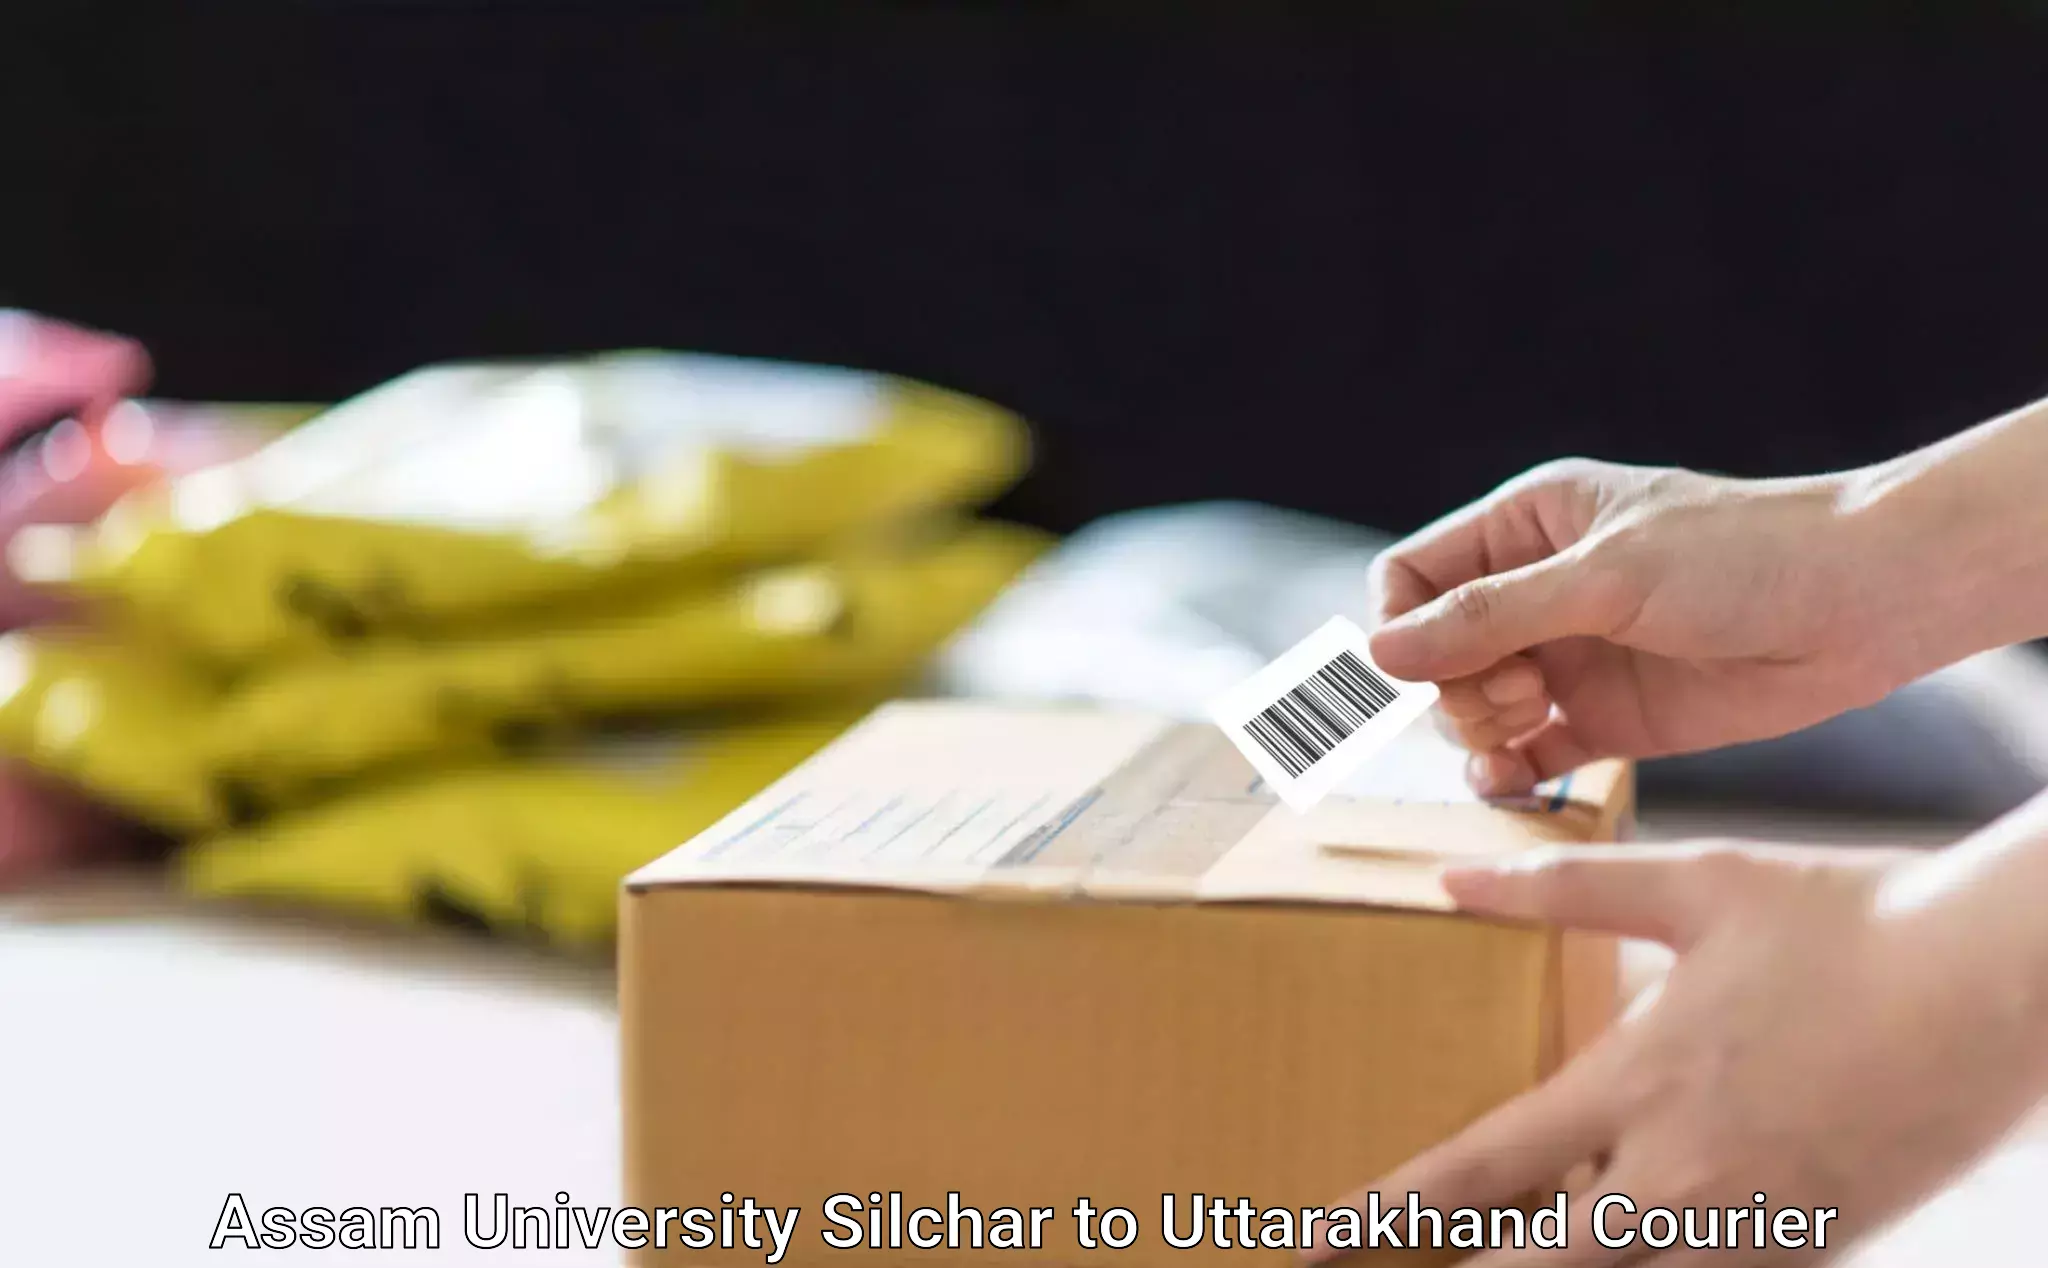 Smart shipping technology Assam University Silchar to Uttarakhand